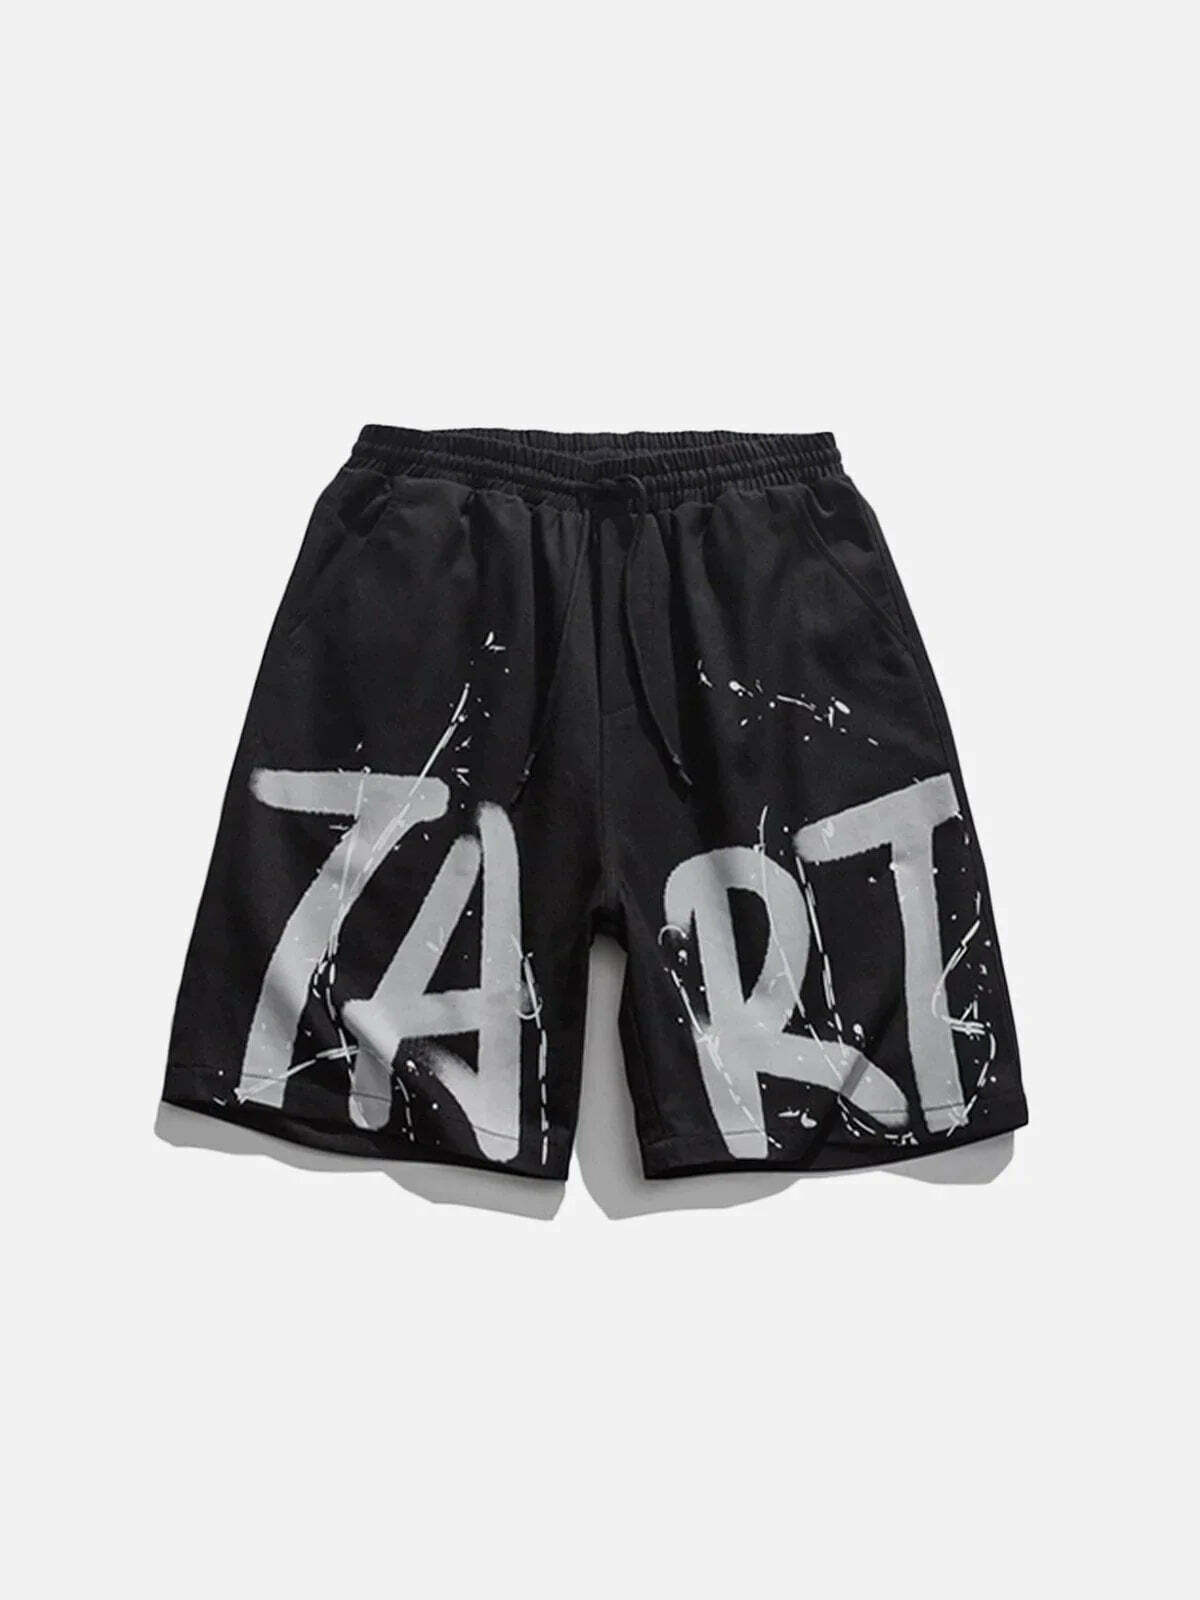 urban graffiti print shorts edgy & vibrant streetwear 6935